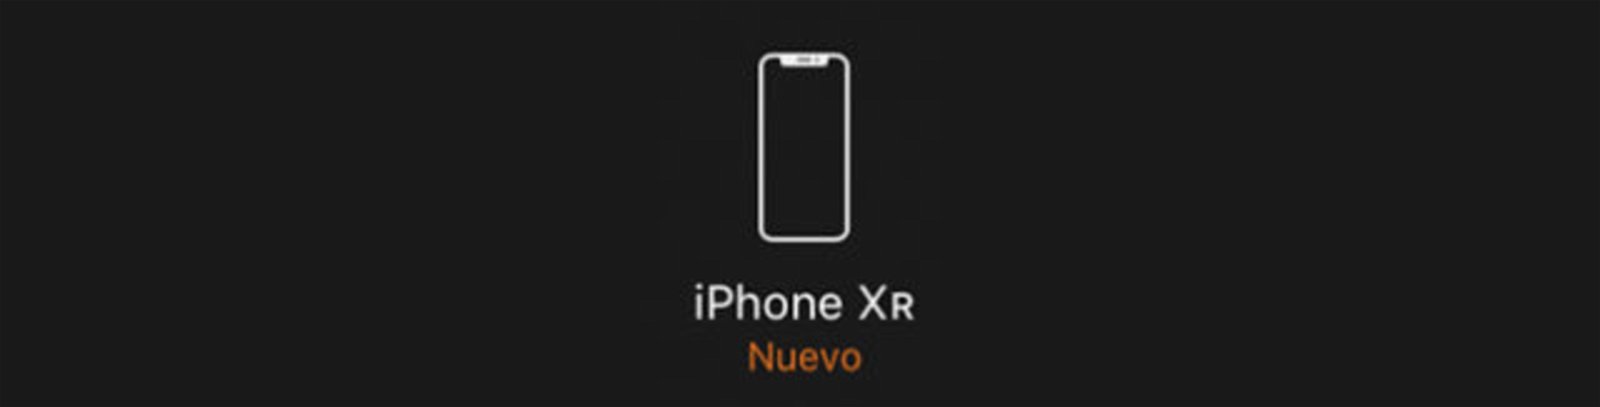 nuevo iPhone XR